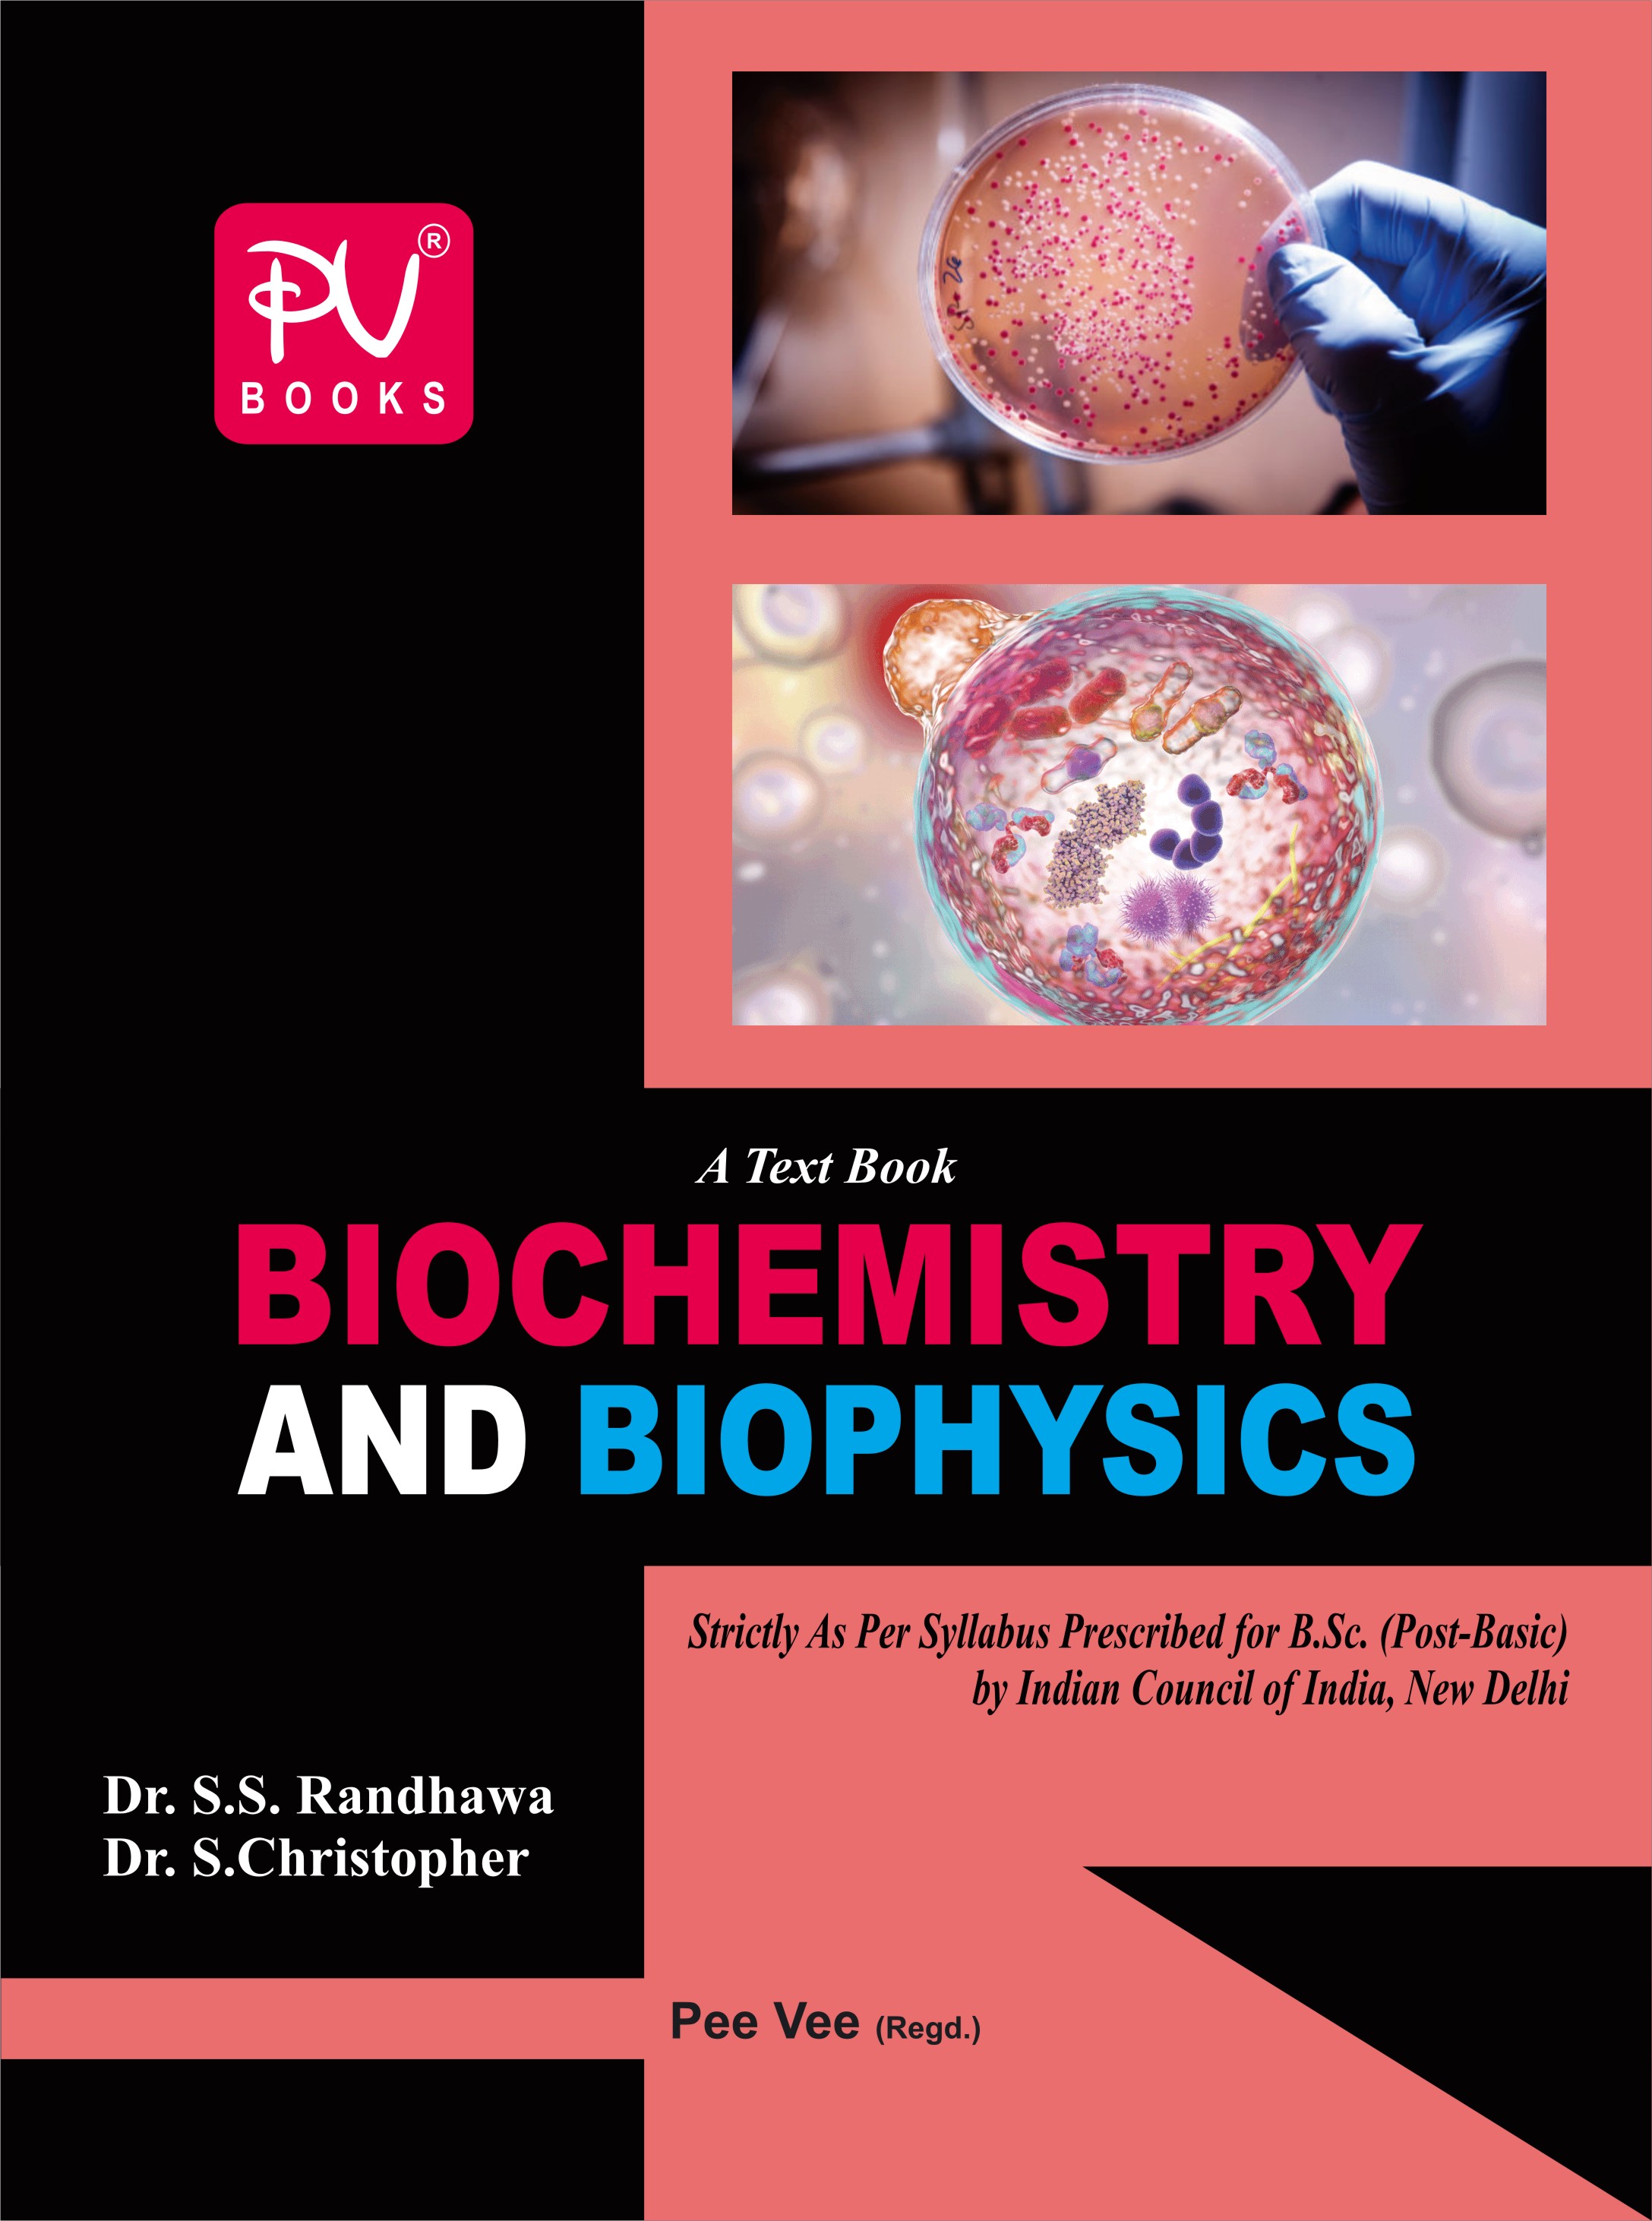 Biochemistry book. Biophysics books. Amp Biochemistry. Книга "радиационная биофизика".